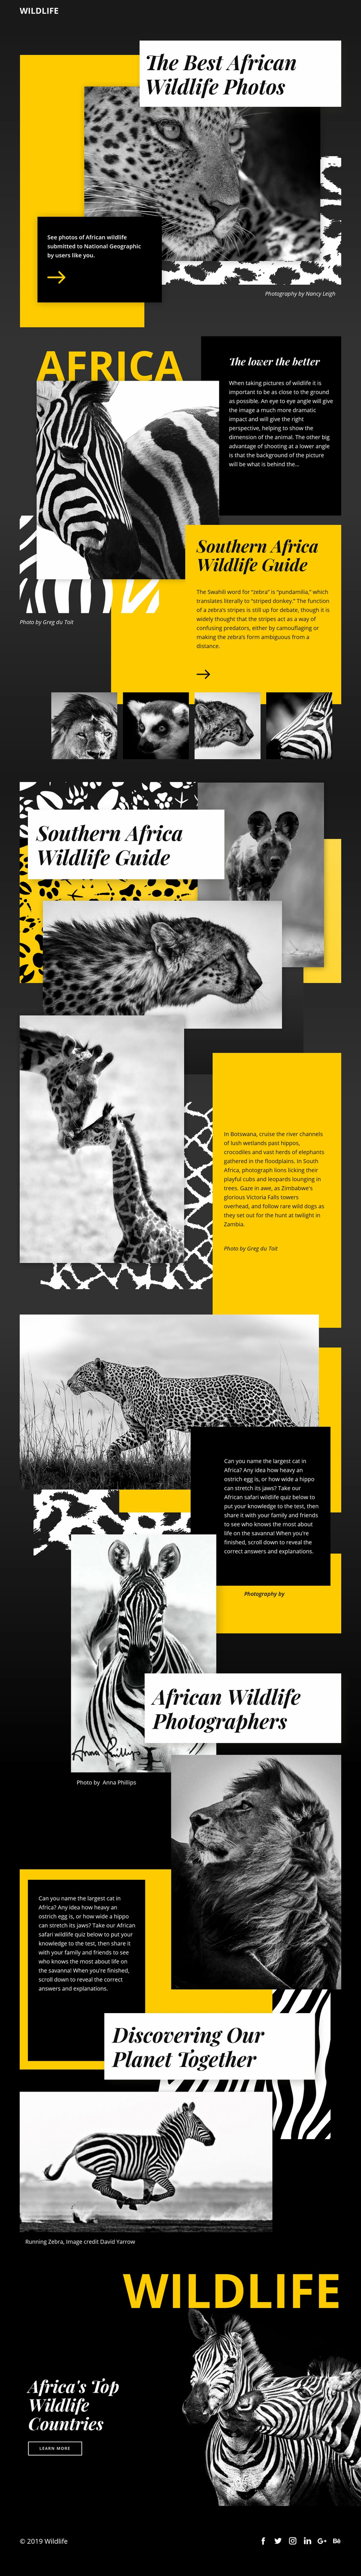 Wildlife Photos Web Page Design